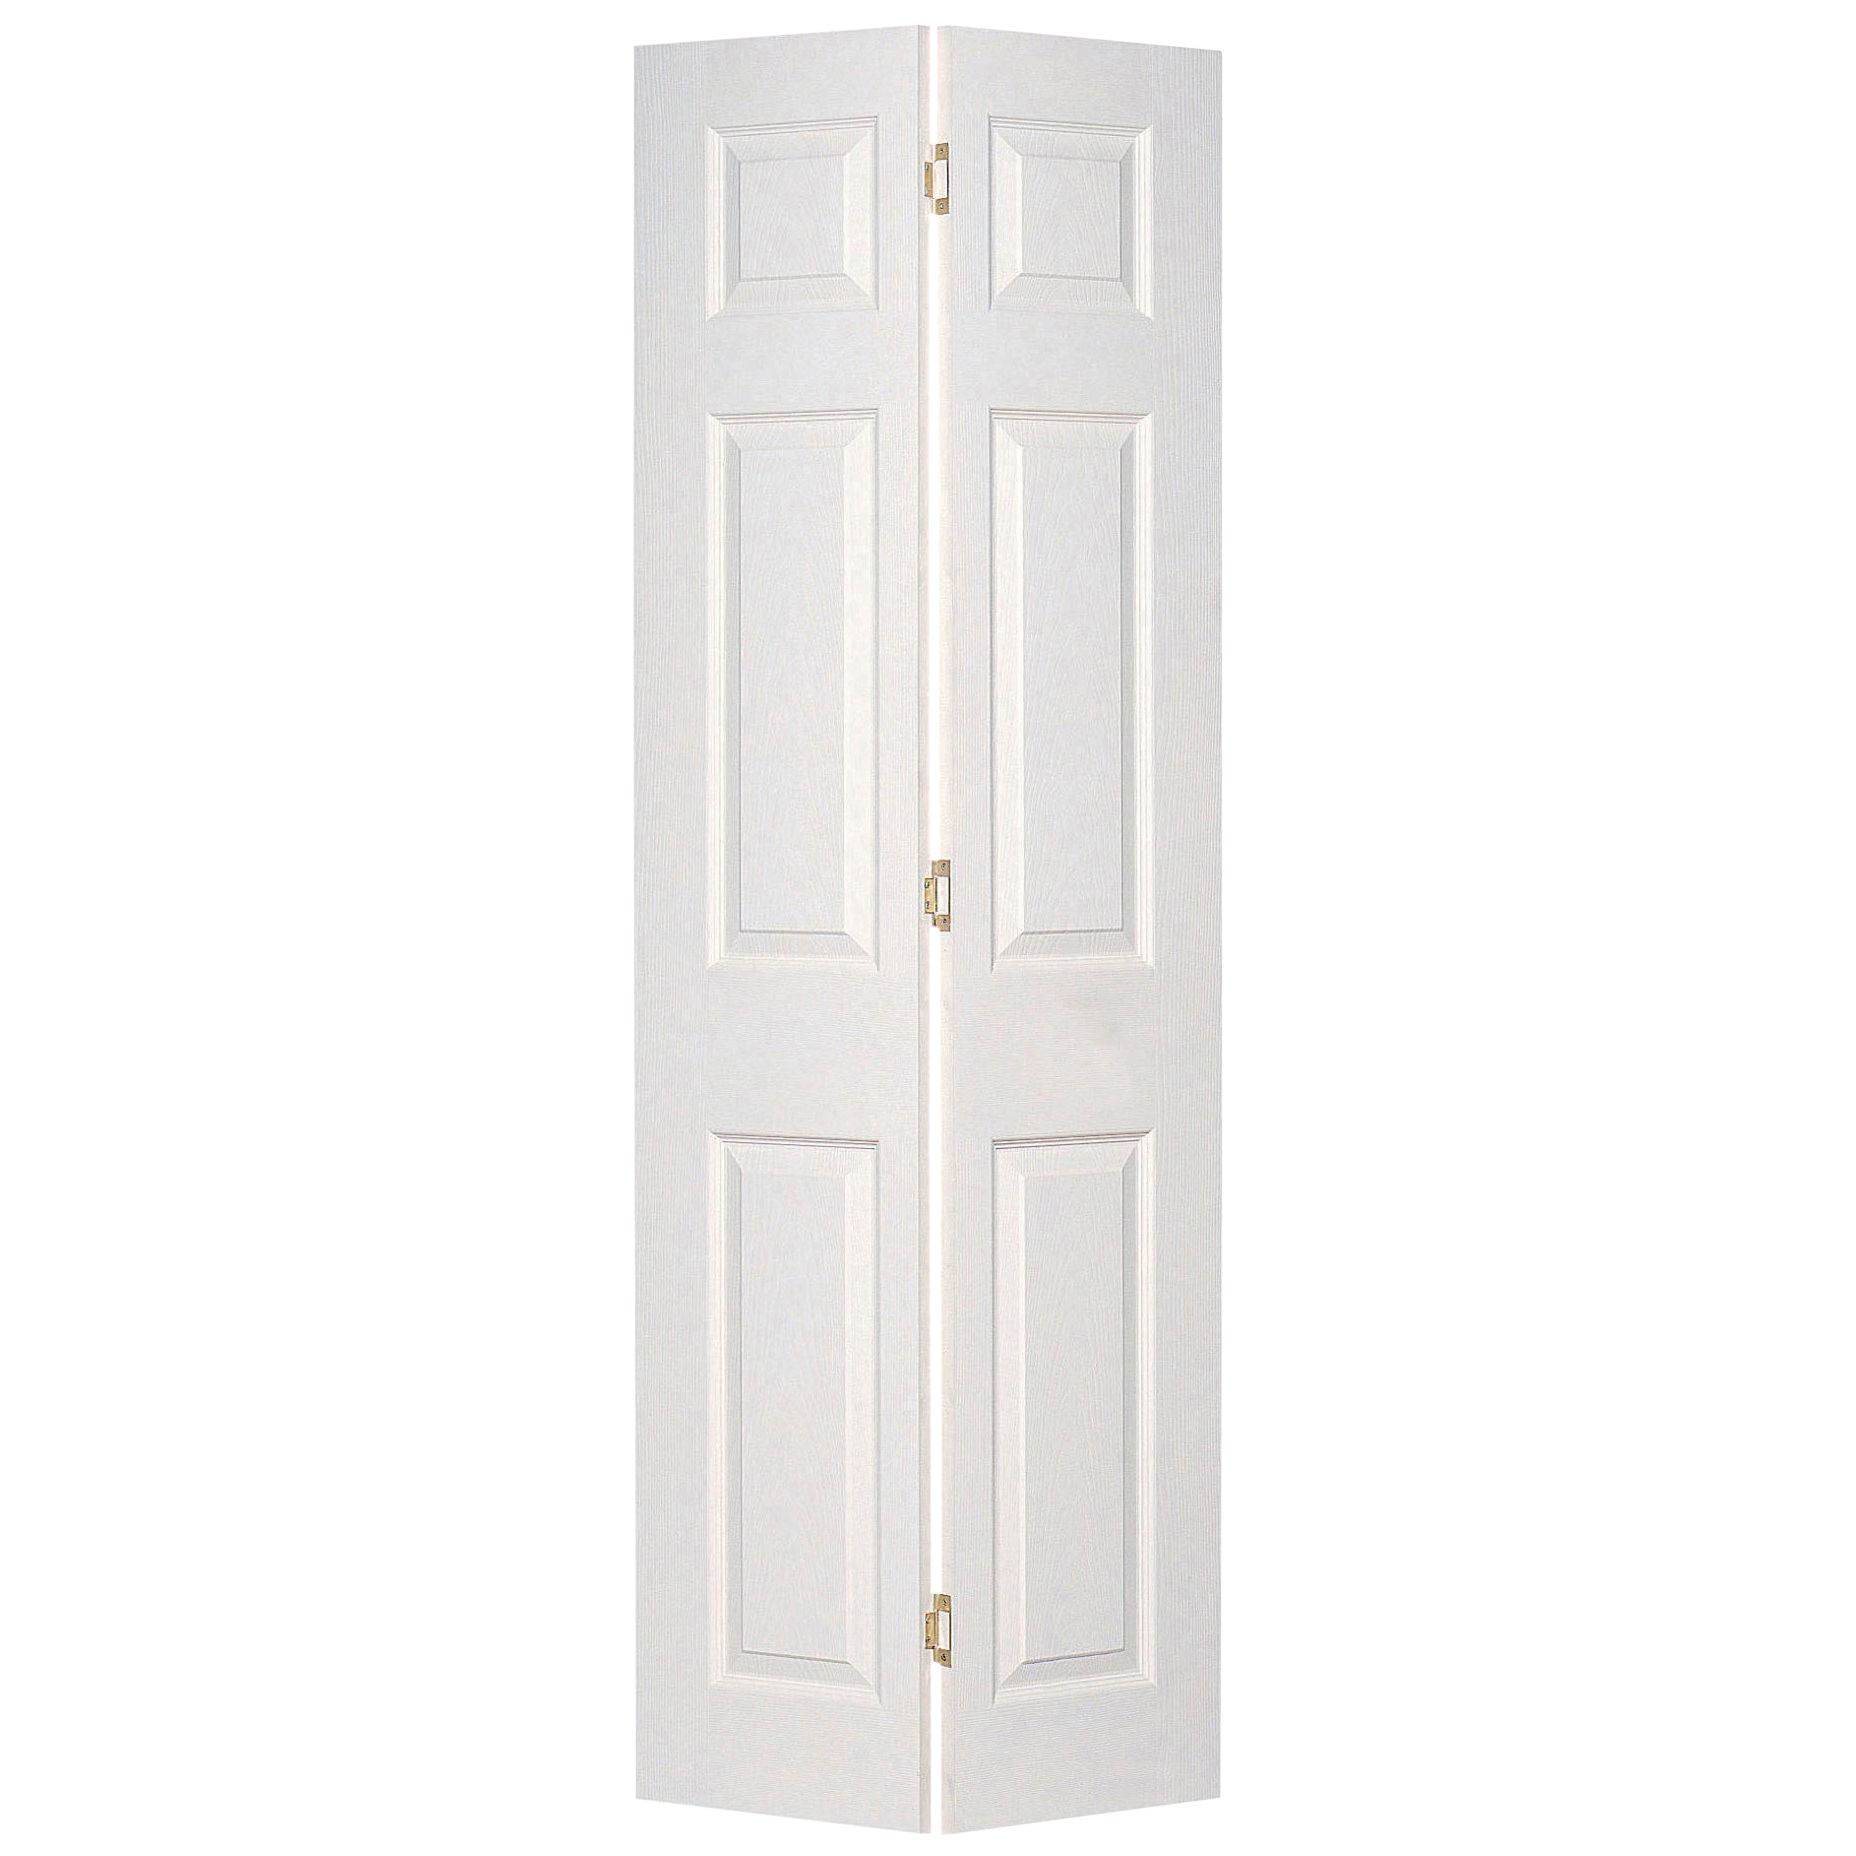 6 panel Unglazed Contemporary White Woodgrain effect Internal Bi-fold Door set, (H)1950mm (W)826mm